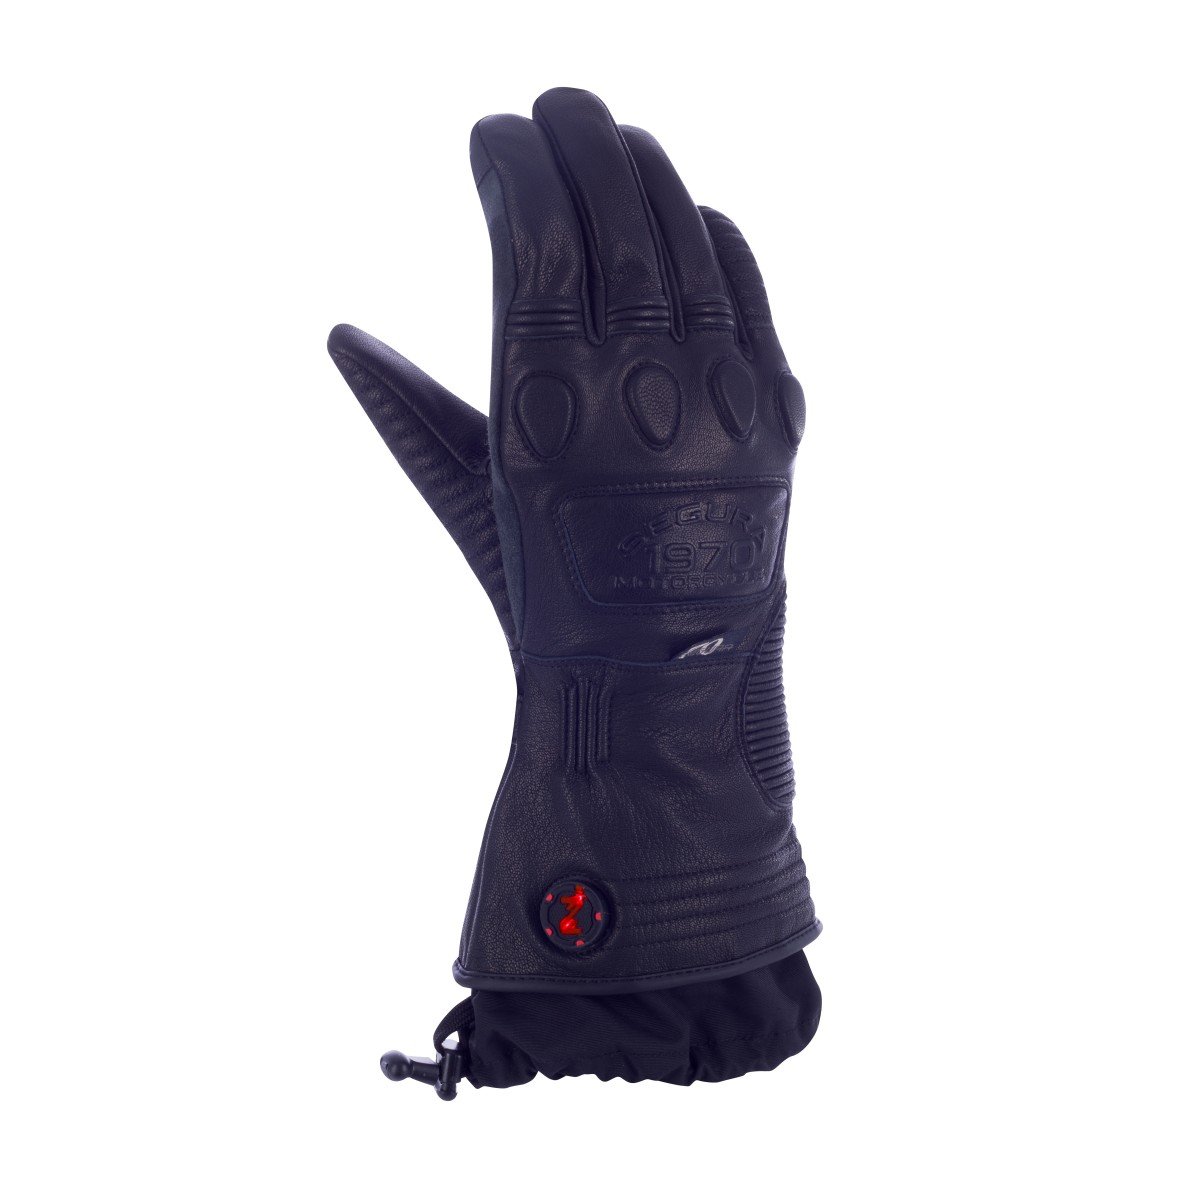 Image of Segura Shiro Black Heated Gloves Size T9 ID 3660815151884